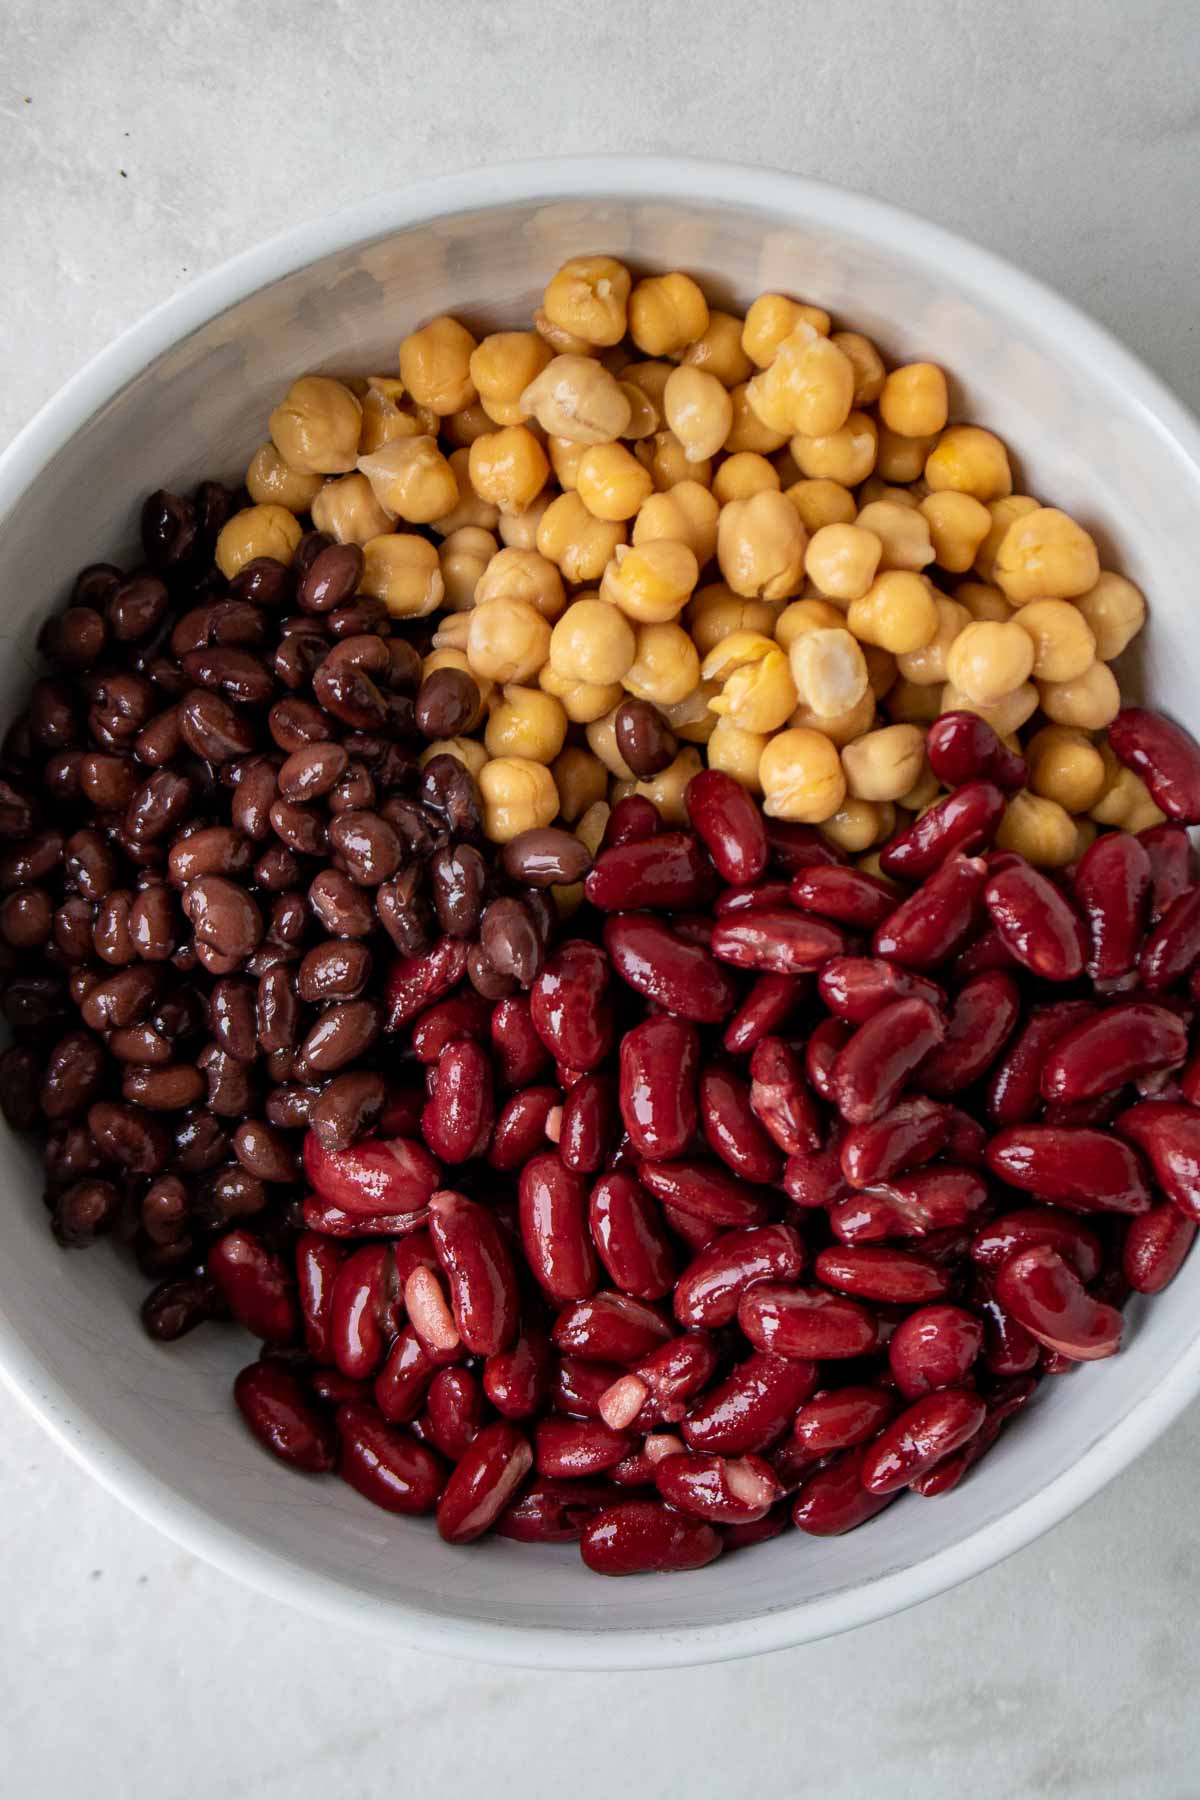 Garbanzo beans (chickpeas), black beans, and black beans in a white bowl.